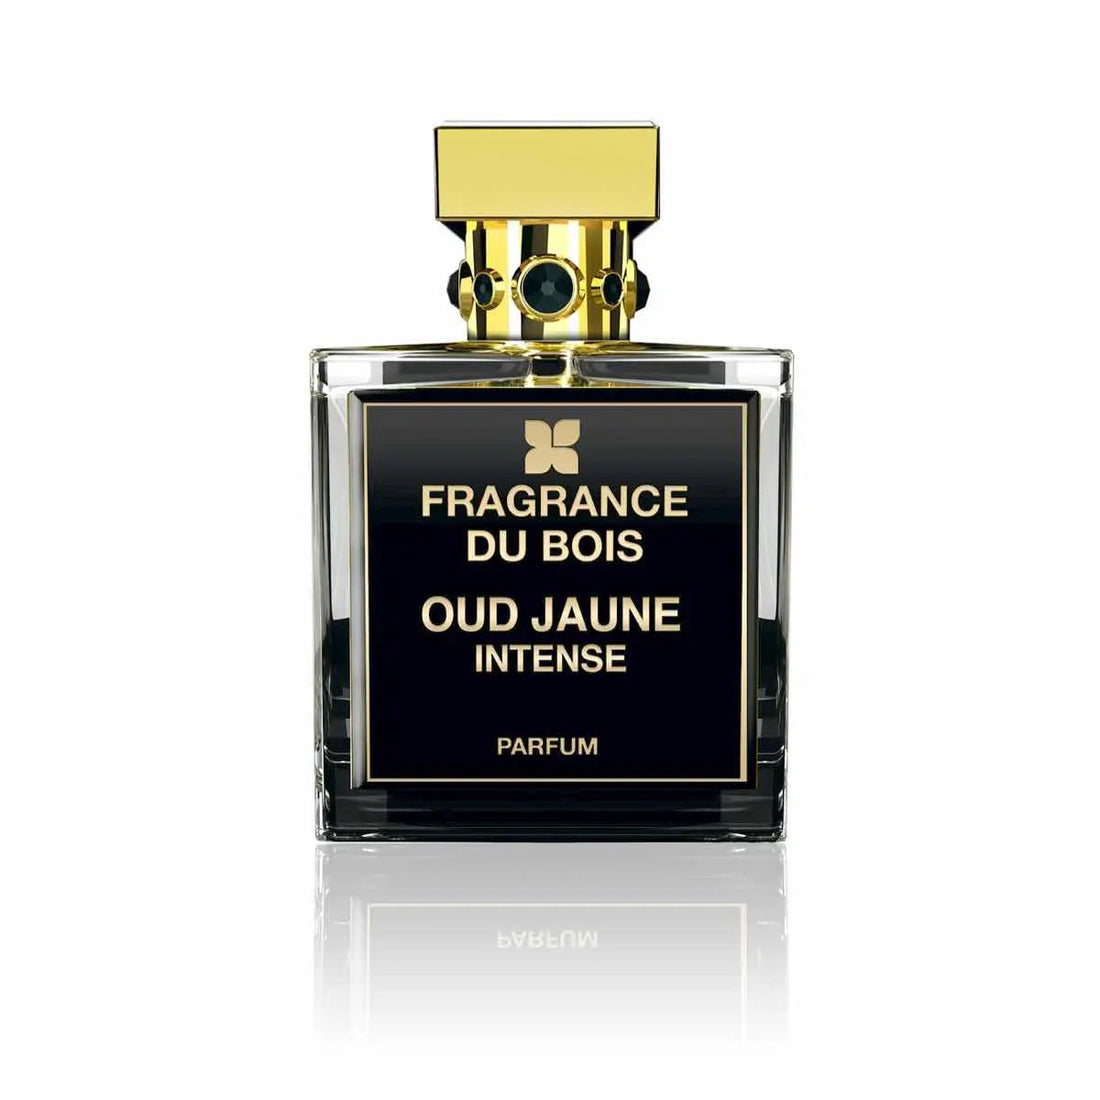 Fragrance du bois Oud Jaune Parfum Intense - 100 ml